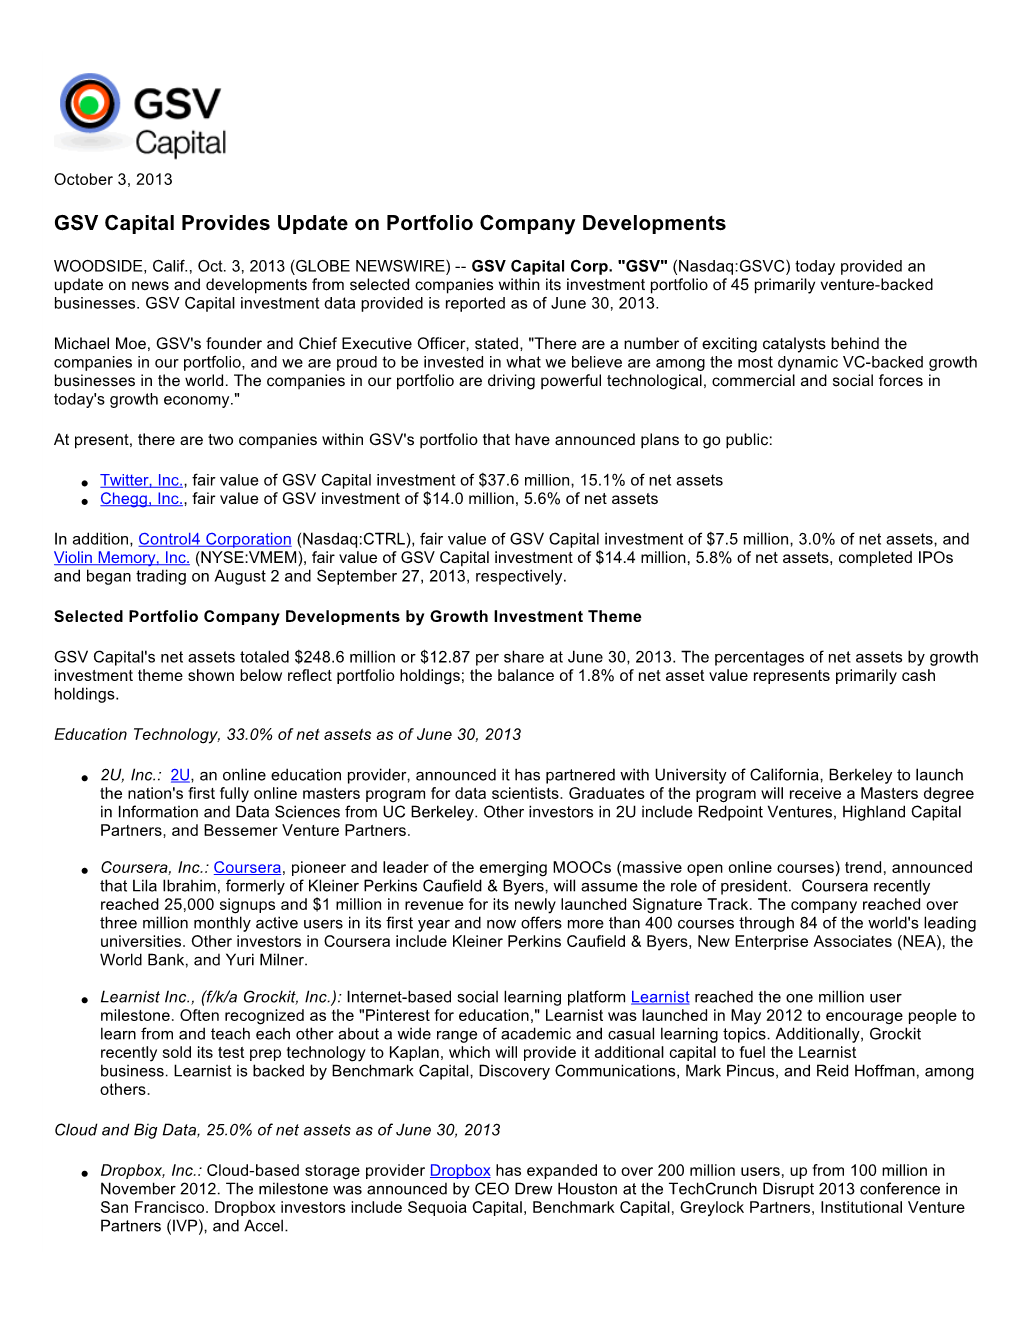 GSV Capital Provides Update on Portfolio Company Developments